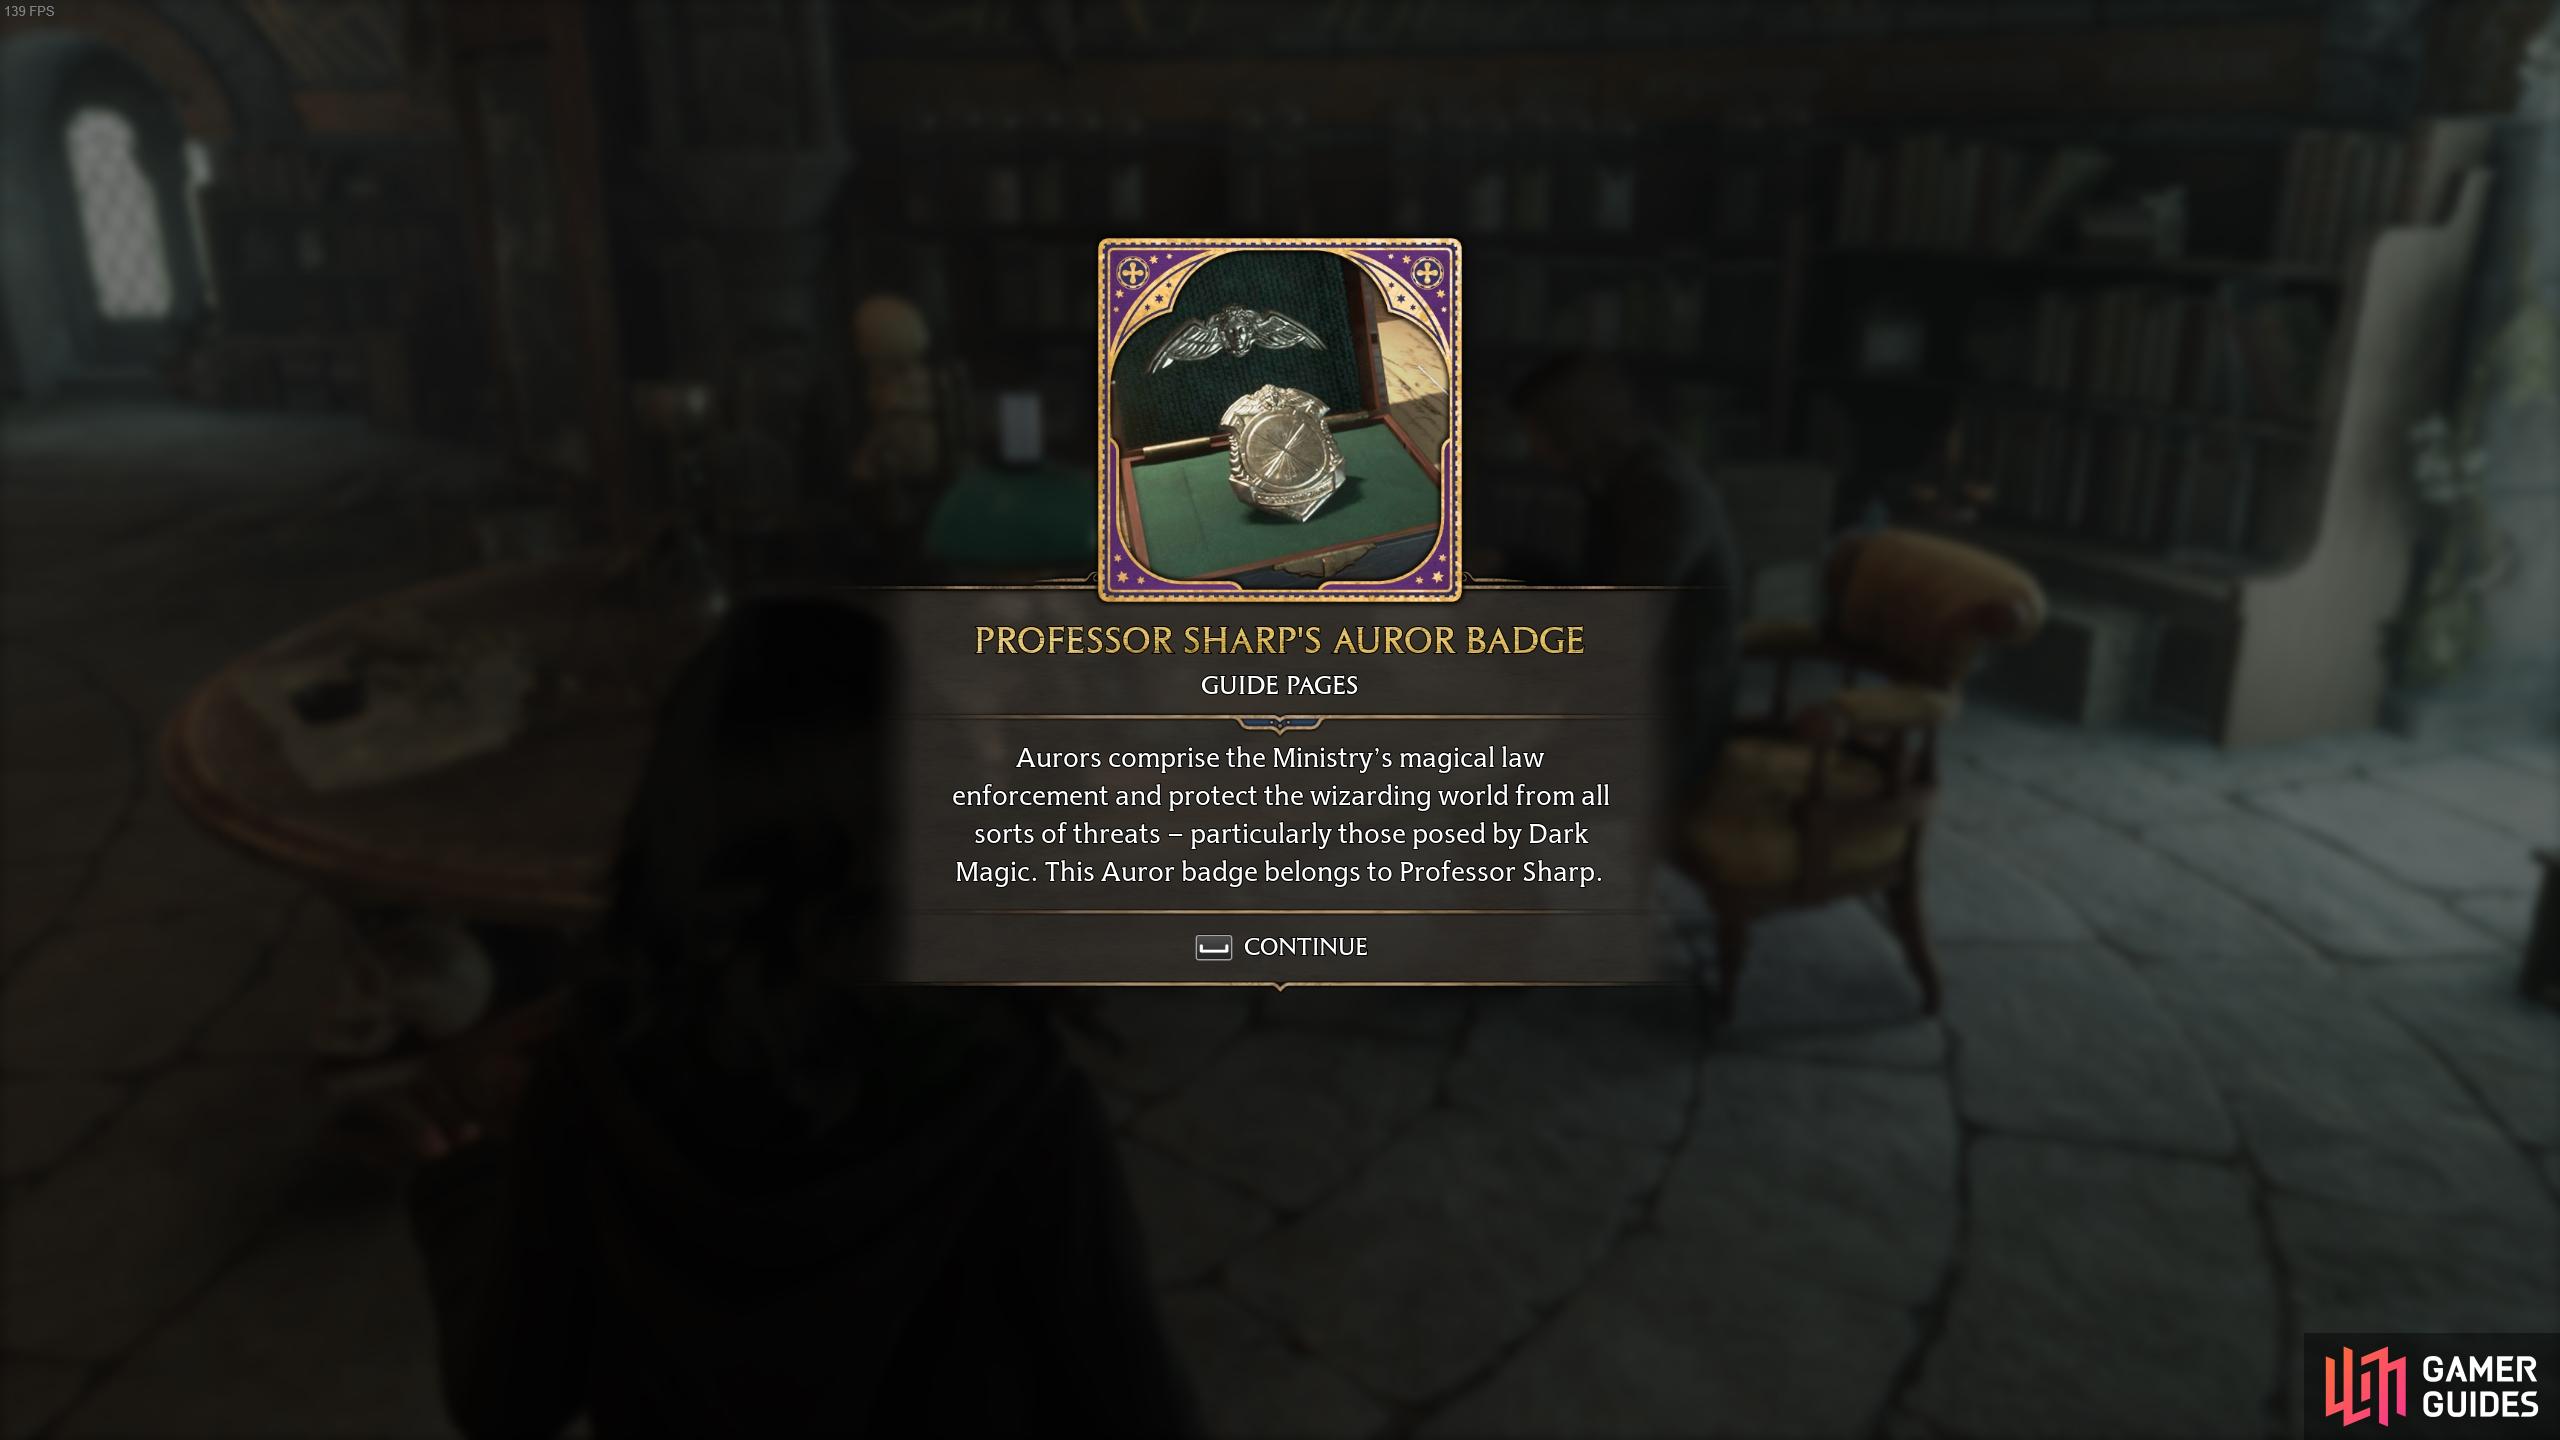 The description for Professor Sharp's Auror Badge.